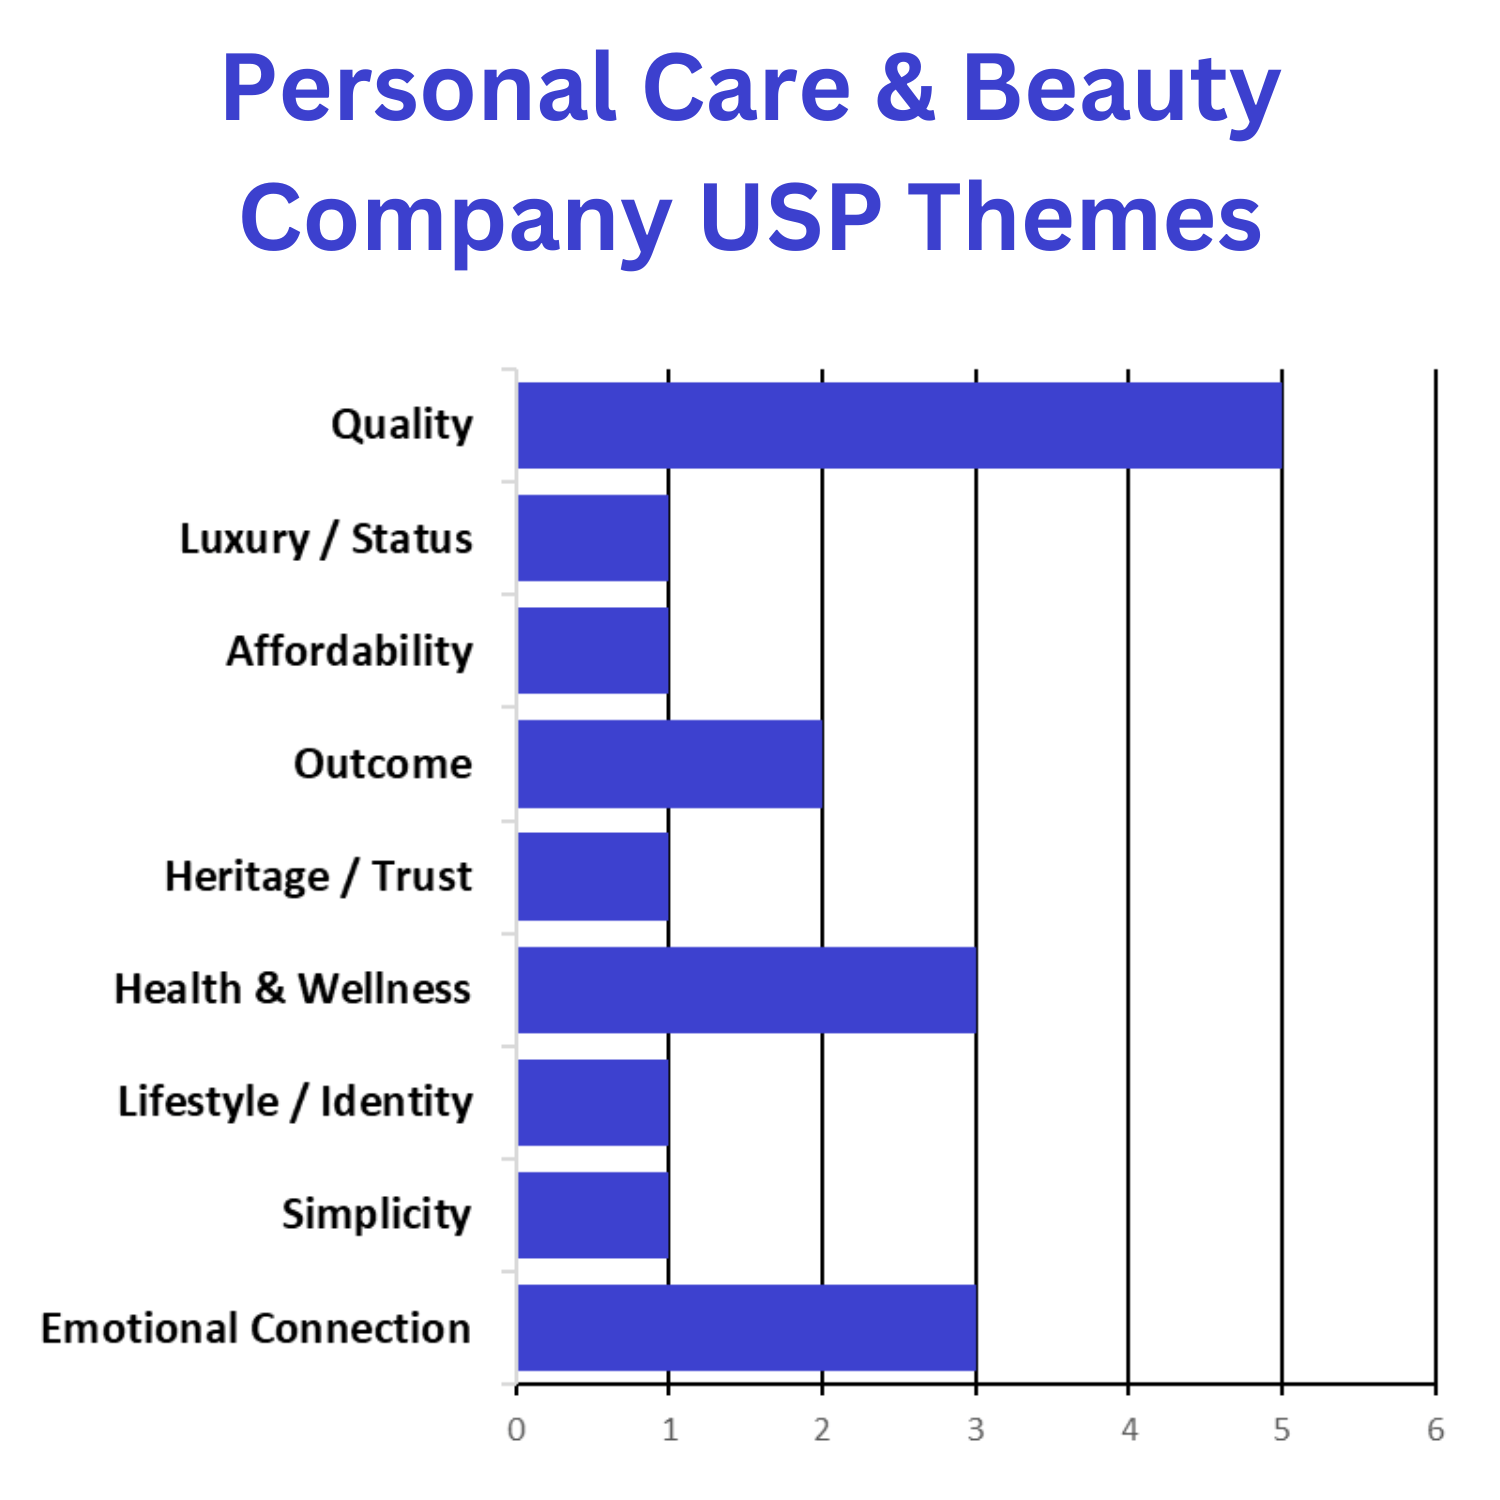 Personal Care & Beauty Company USP Themes